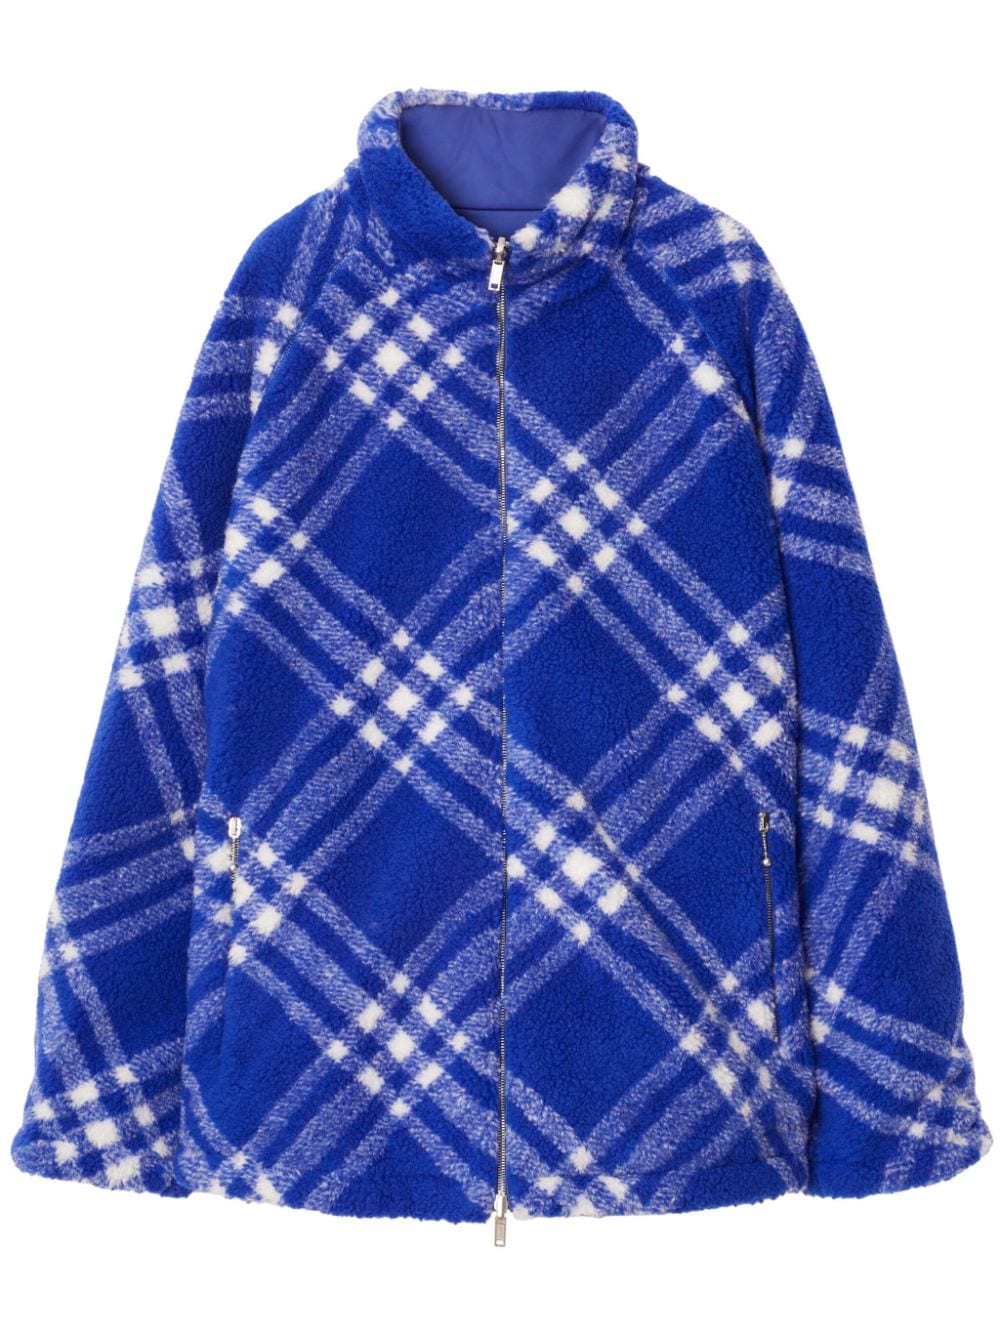 Burberry check-print Fleece Jacket - Farfetch